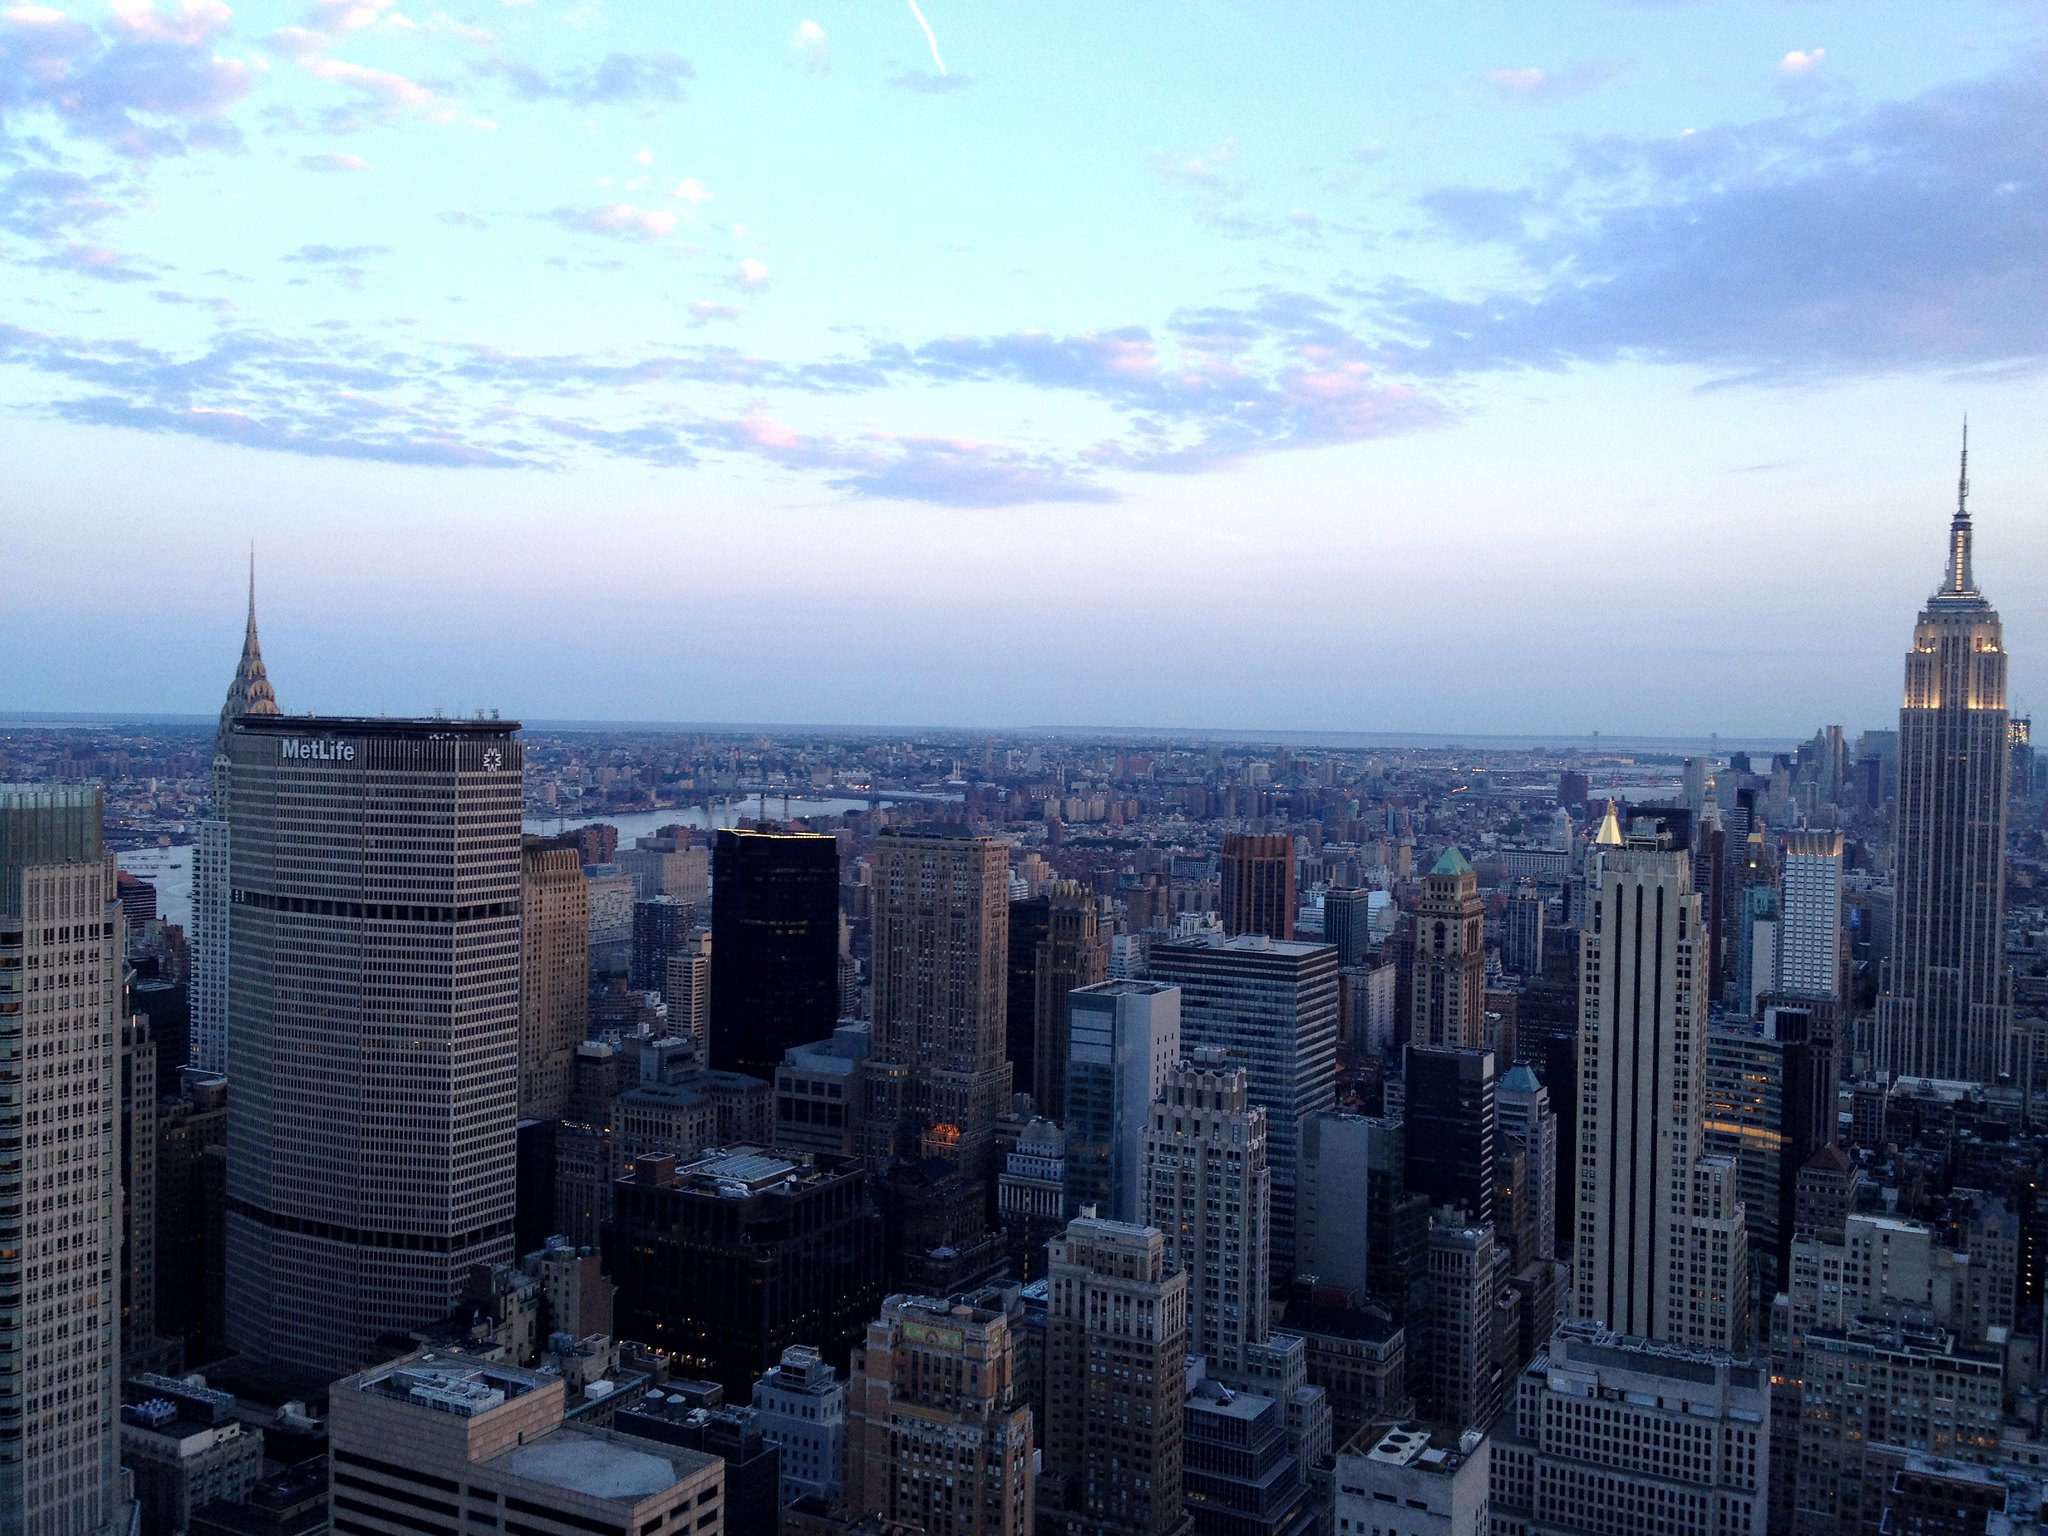 NYC skyline from Rockefeller Center